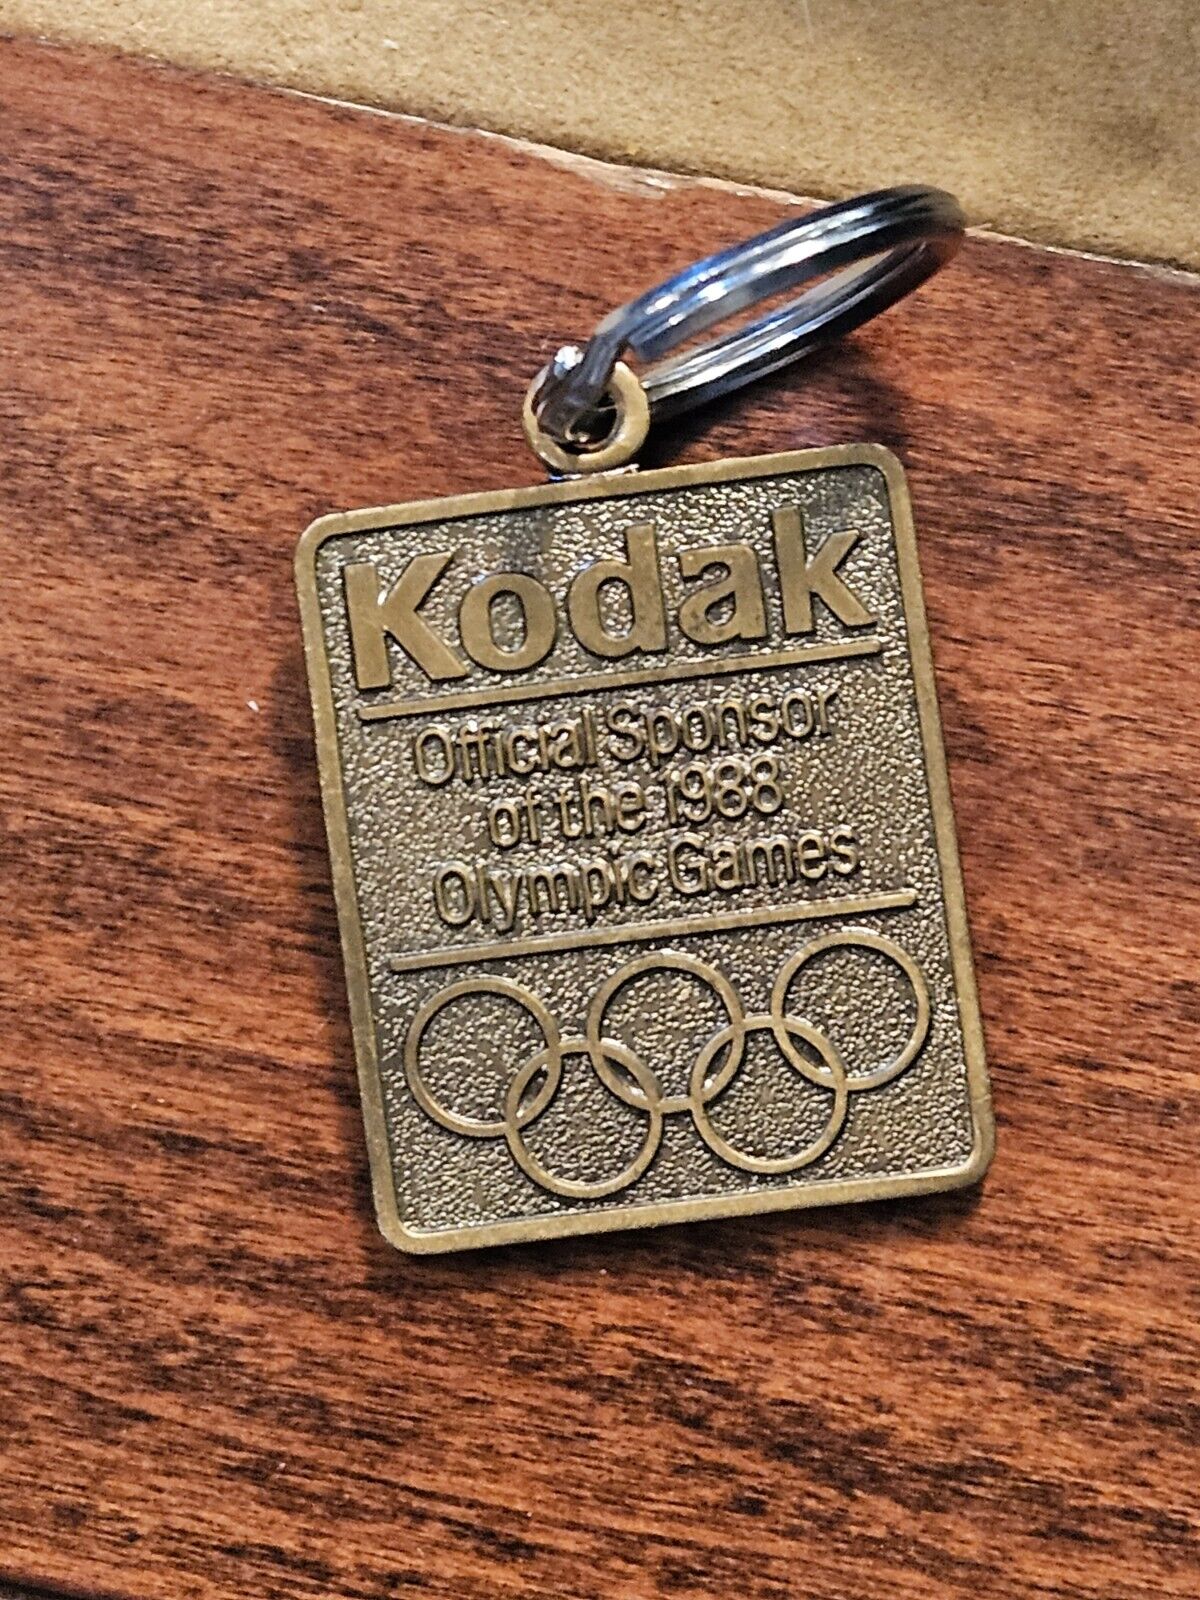 Vintage Kodak Official Sponsor Of The 1988 Olympics Keychain Brass